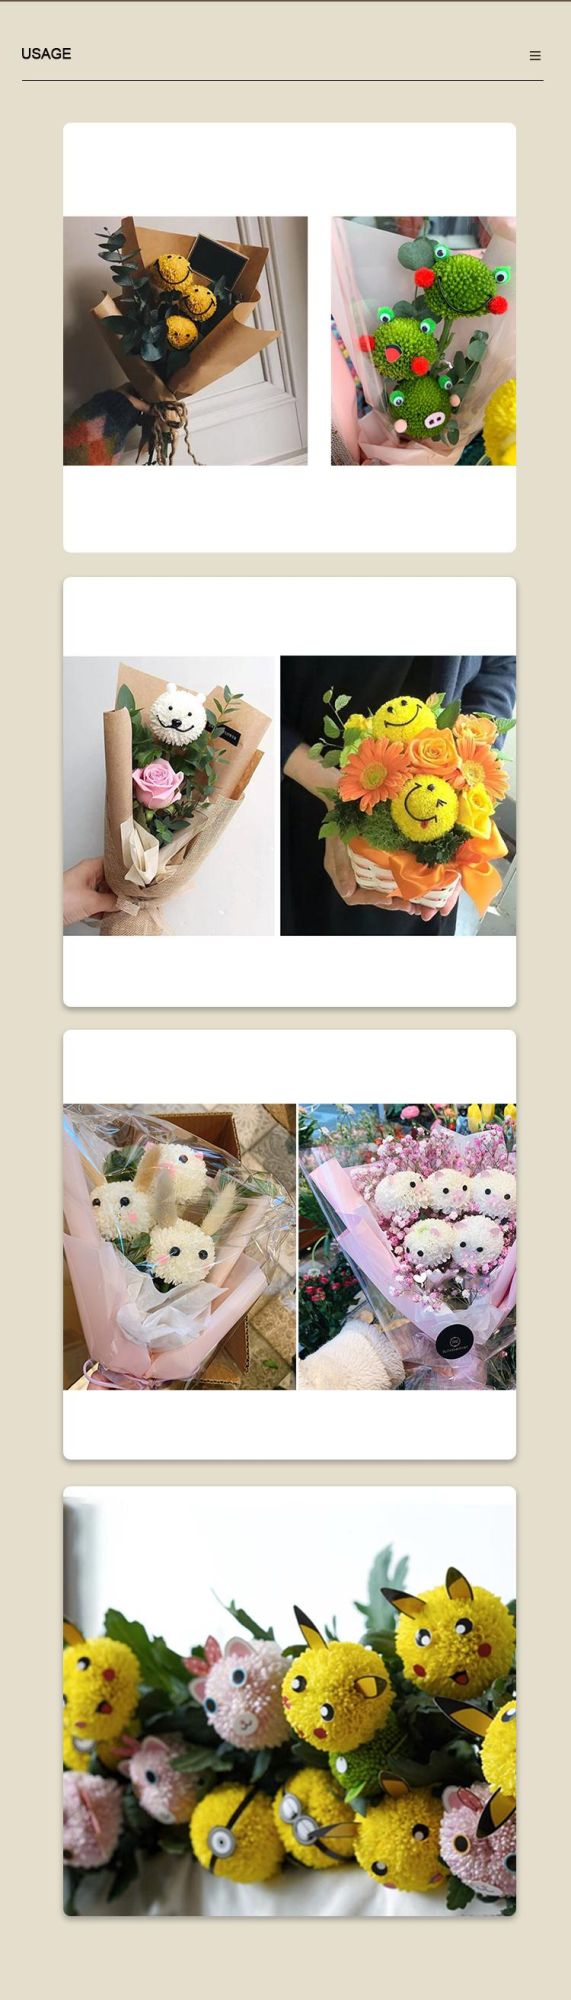 Hot Sale Chrysanthemum Soap Flower Decorative Flower Gift in Box